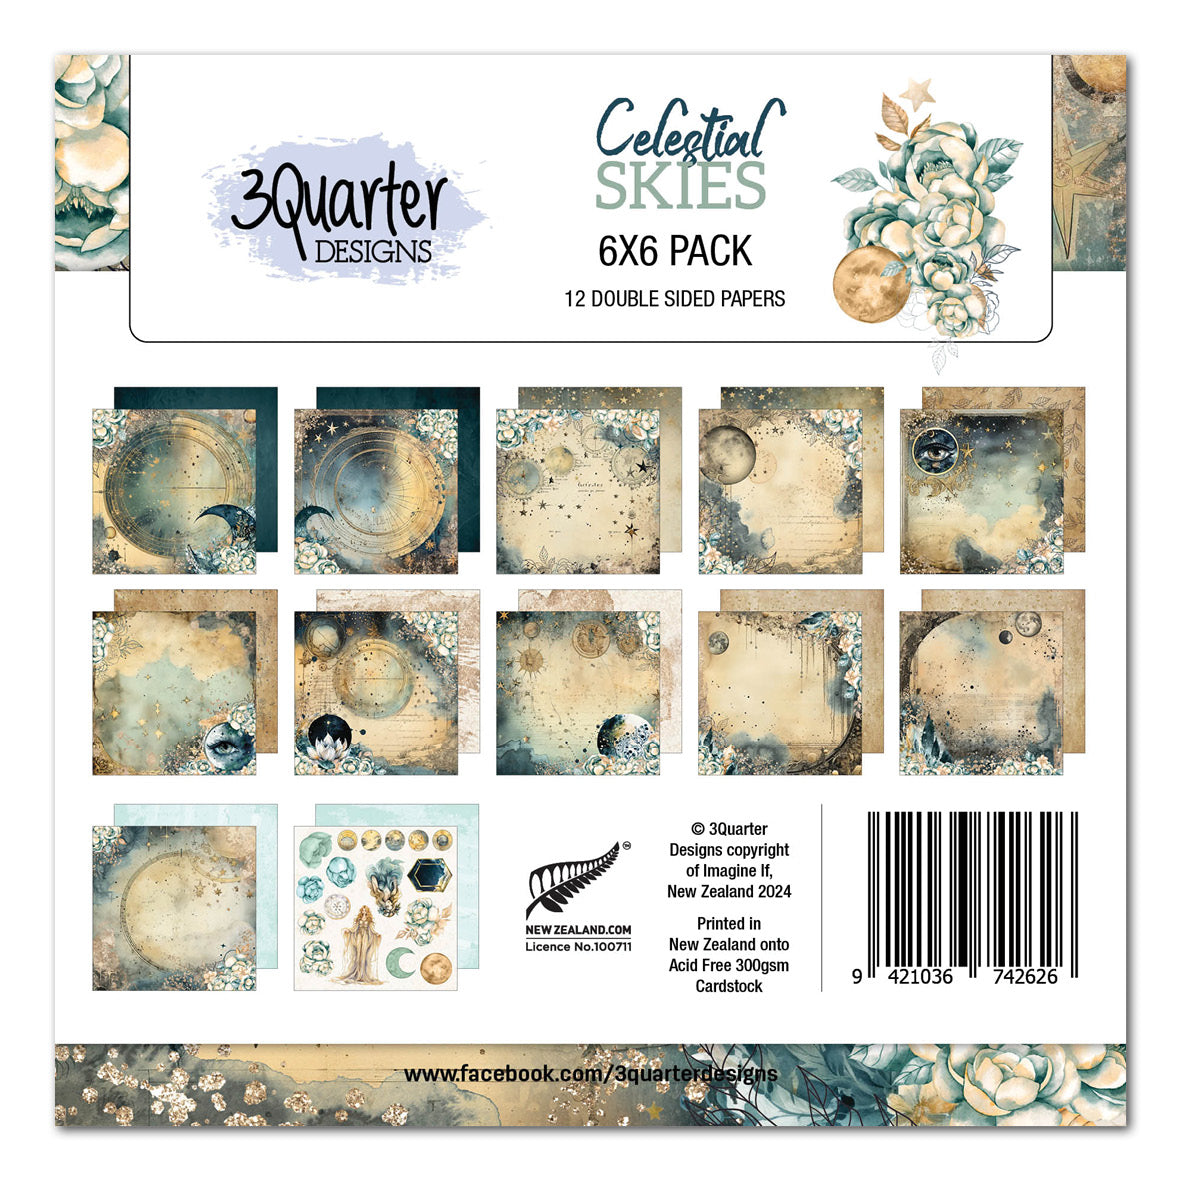 3Quarter Designs Celestial Skies 6x6 Paper Pack